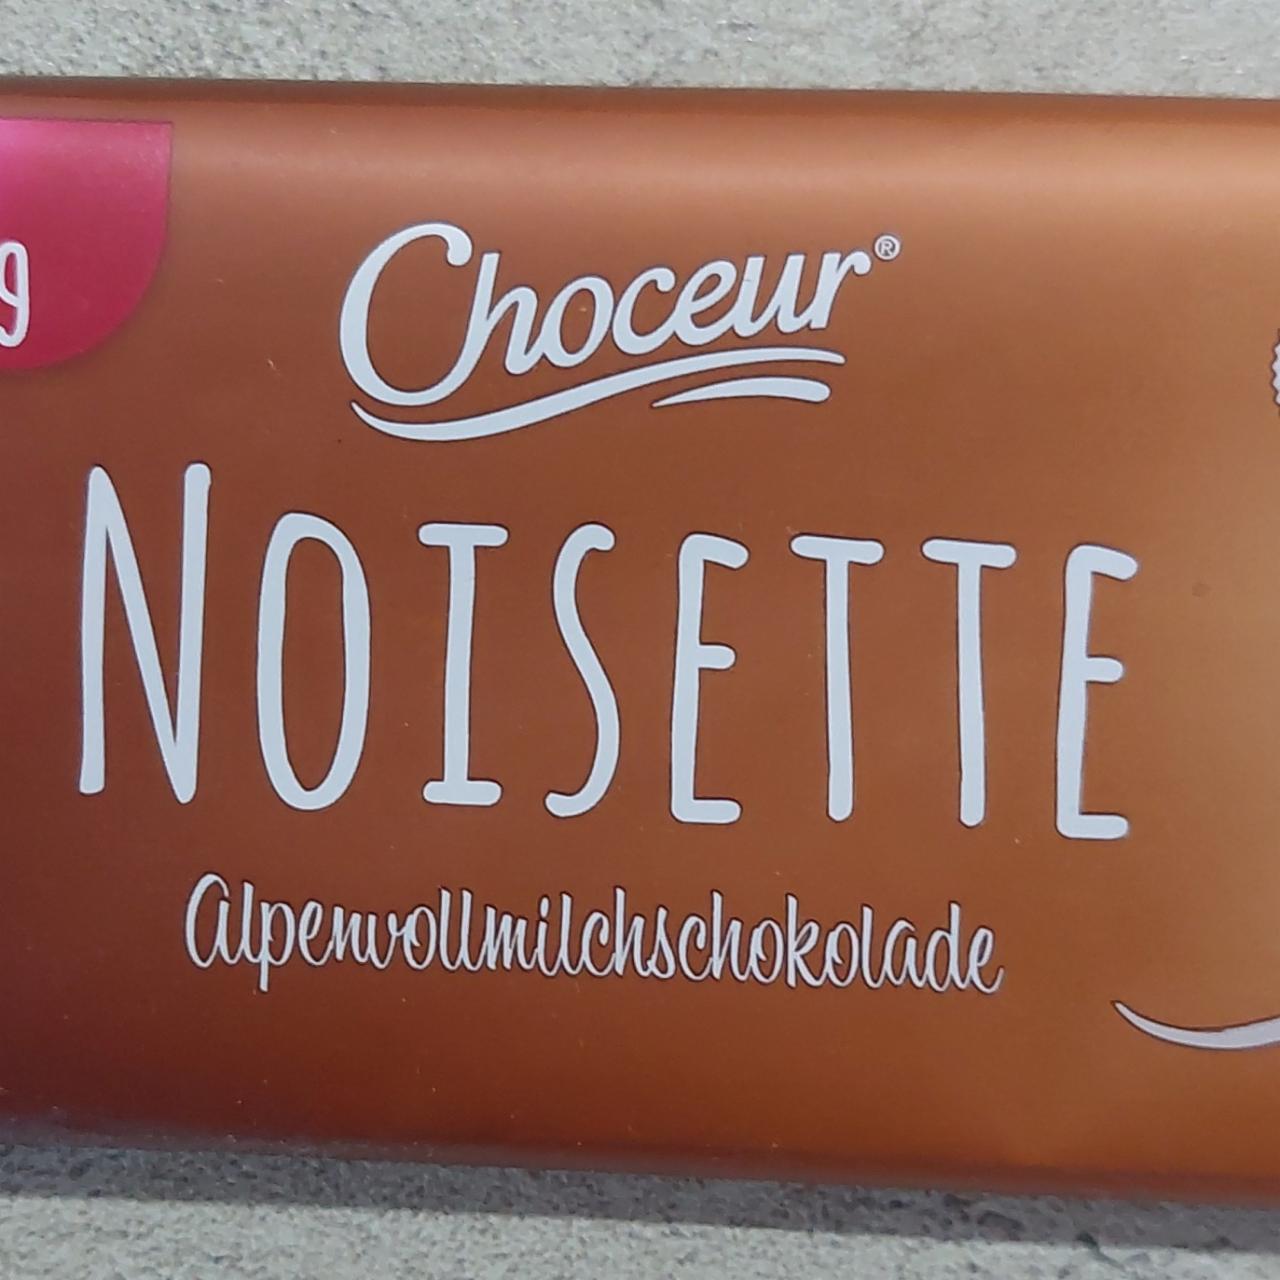 Fotografie - Noisette Alpenvollmilchschokolade Choceur